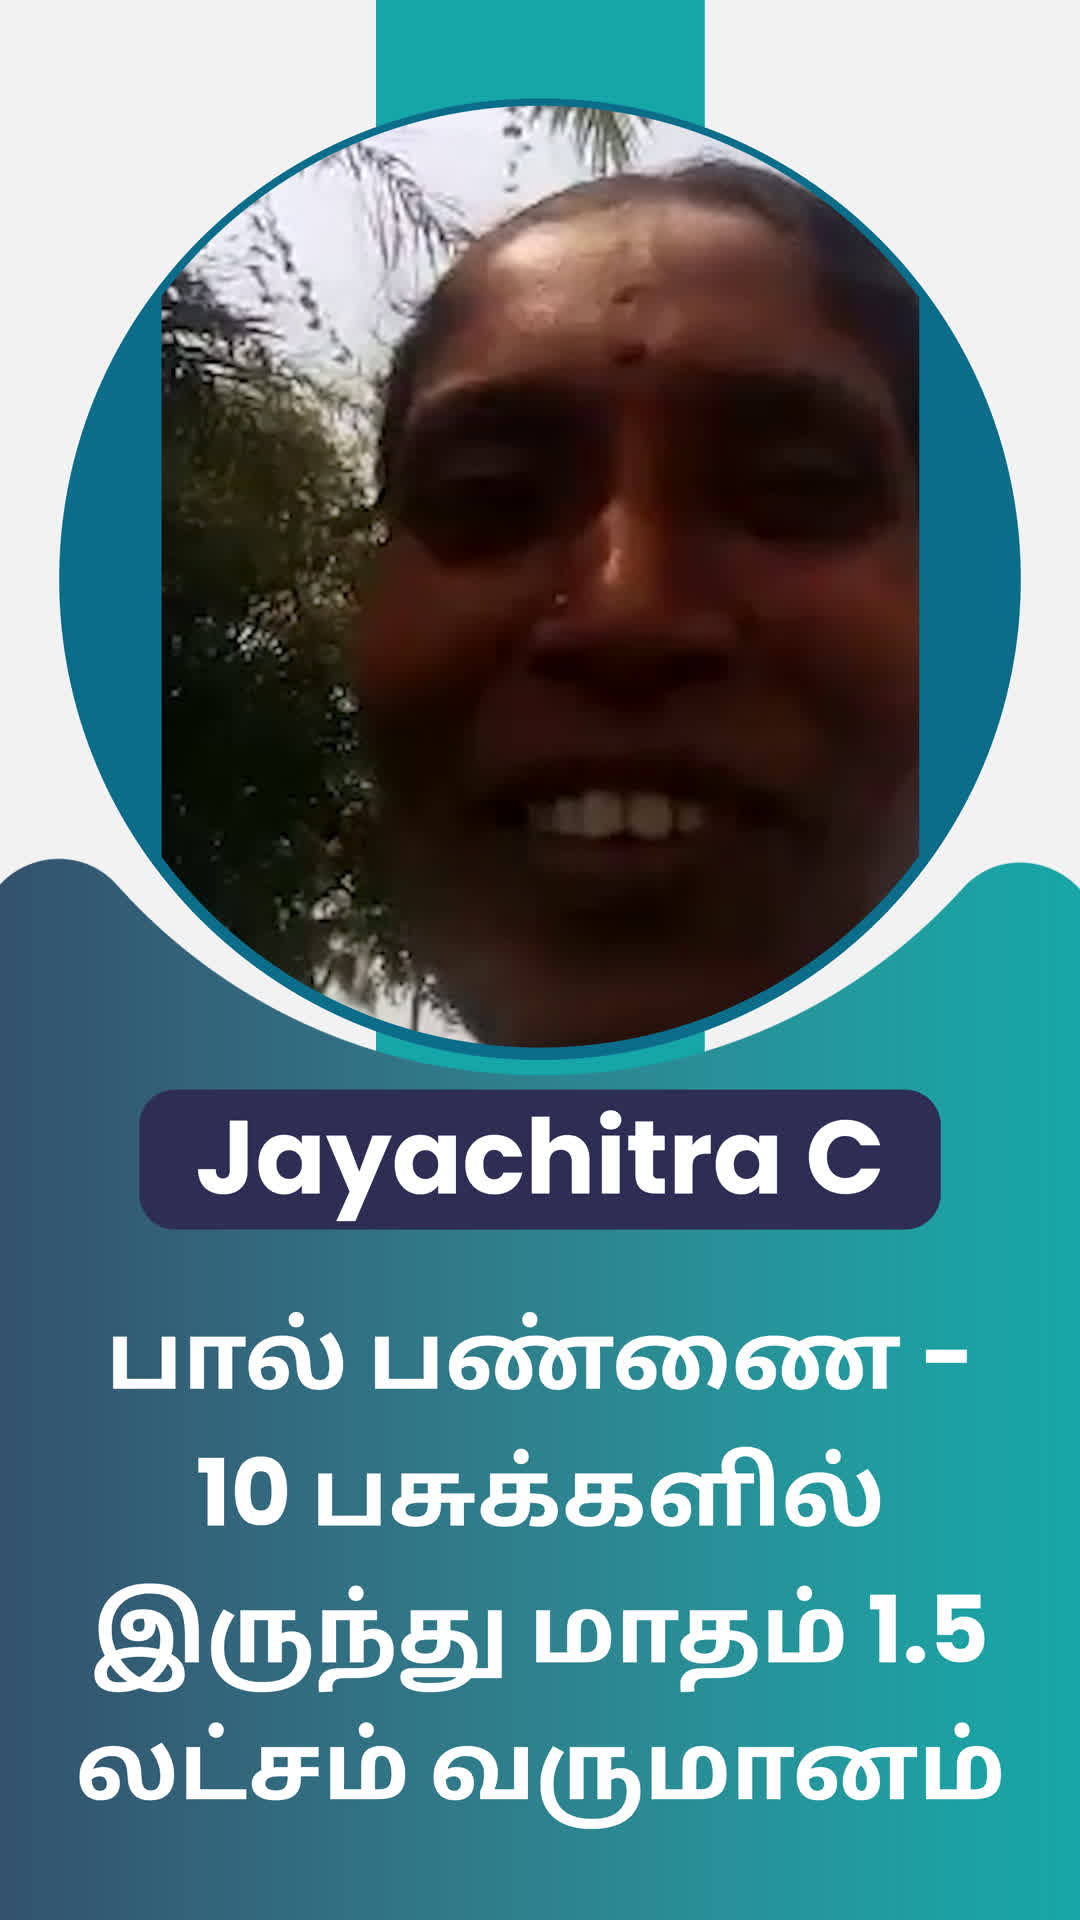 S.jayachitra's Honest Review of ffreedom app - Karur ,Tamil Nadu